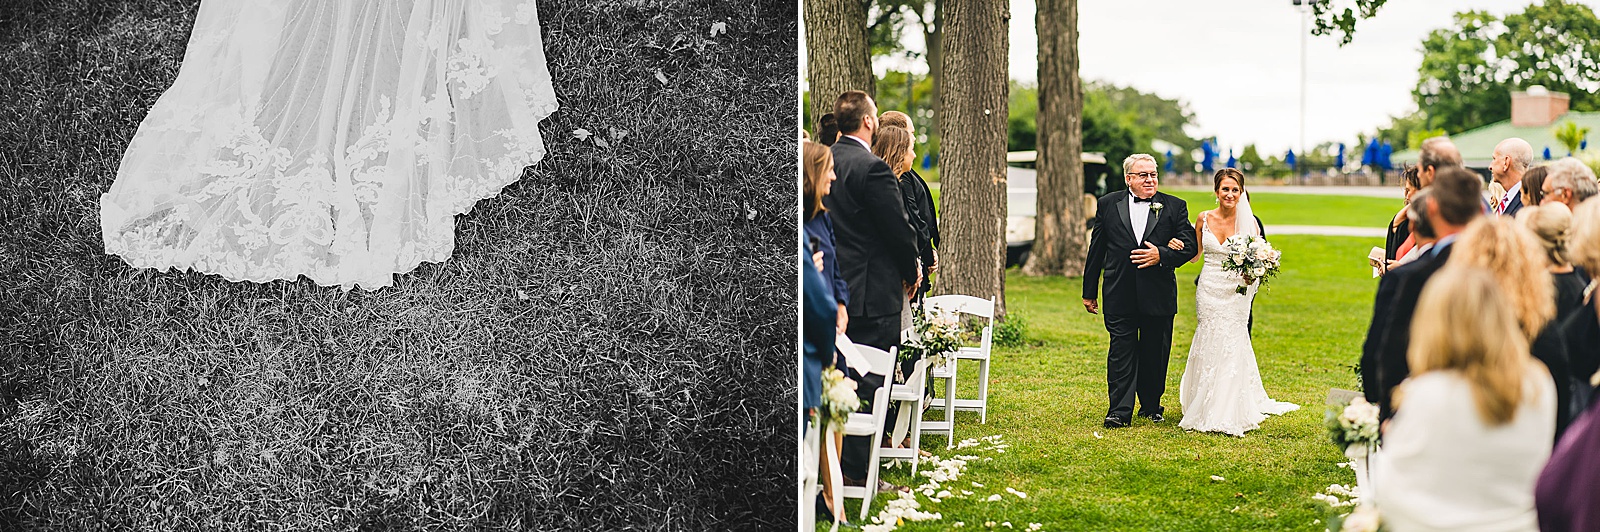 34 outdoor wedding photography